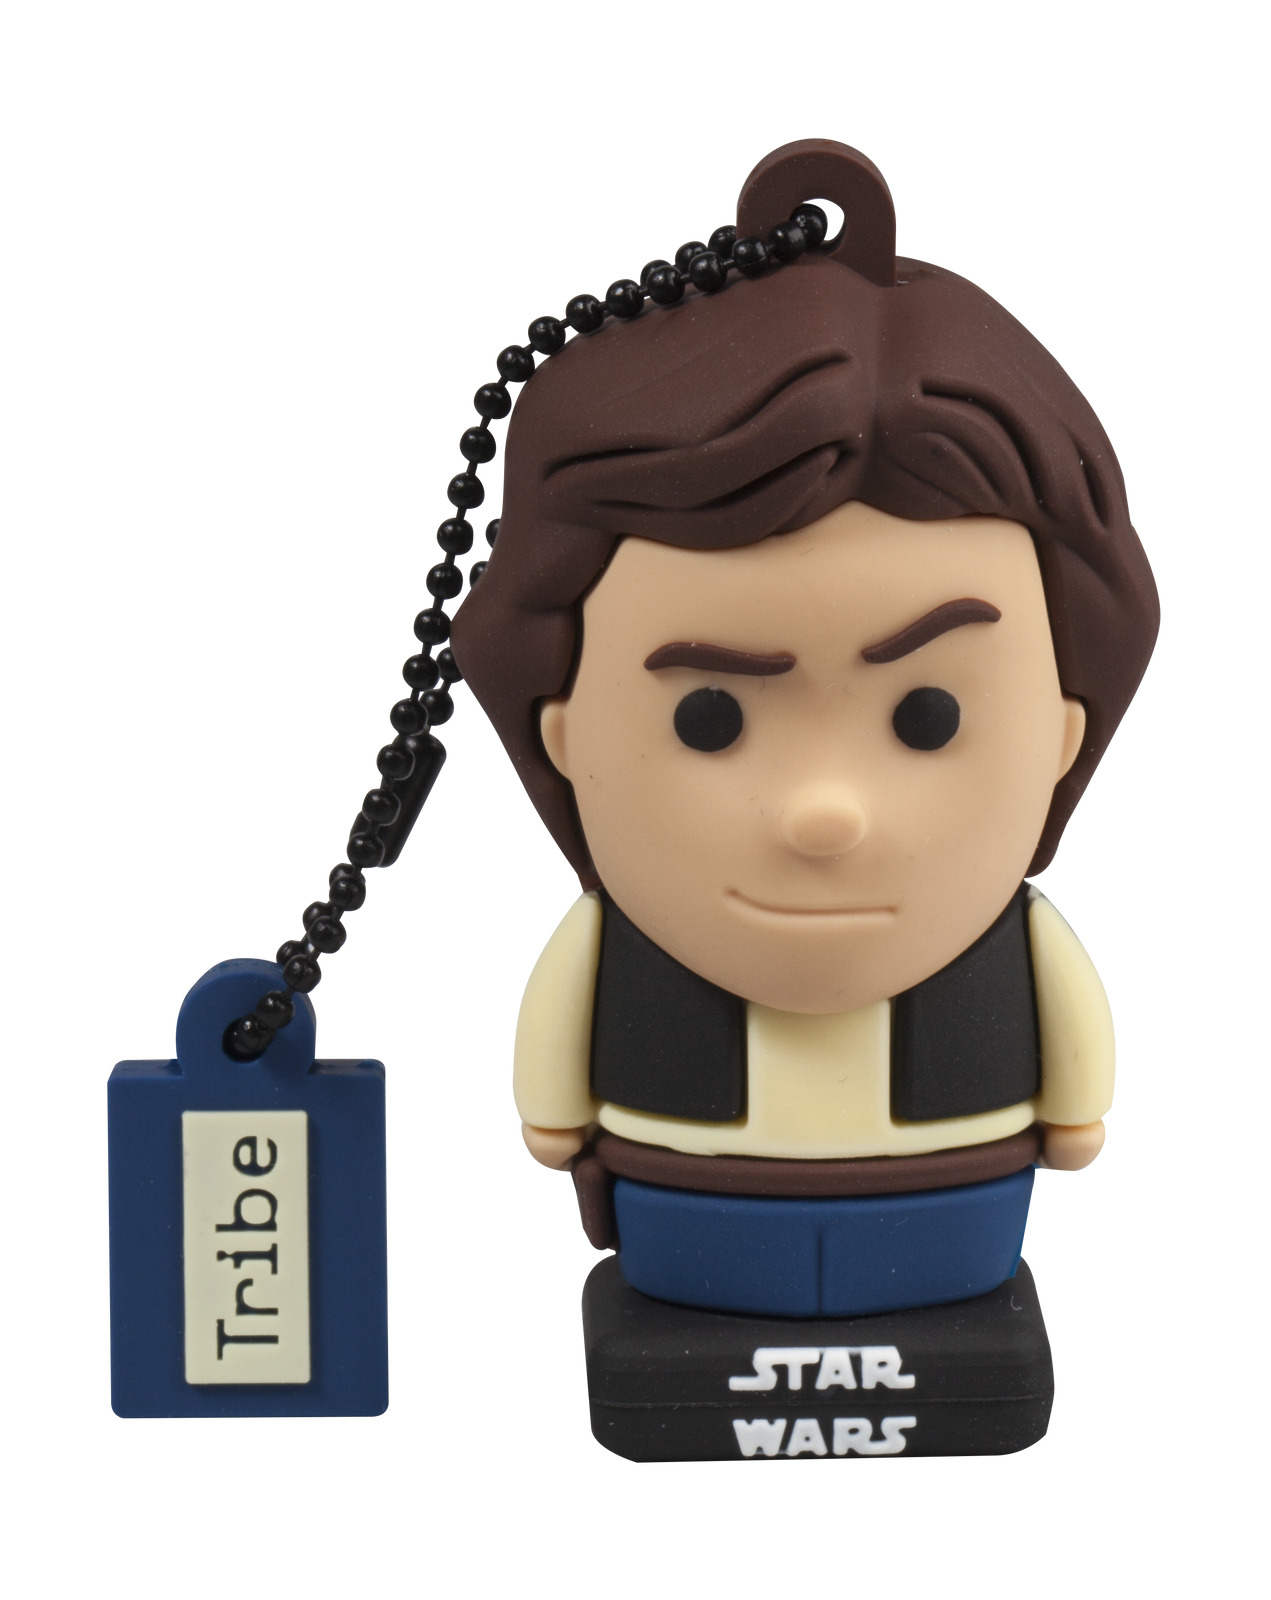 Thumb Drive Memory Stick USB Save Computer Info College Star Wars Han Solo-16GB